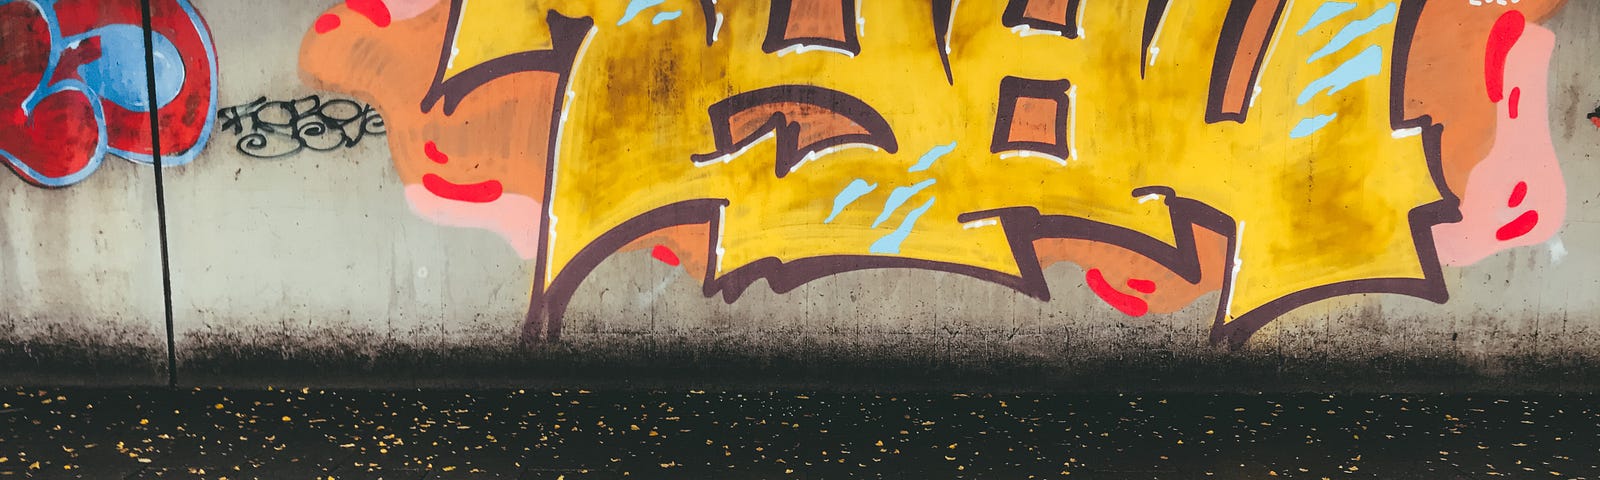 Grafitti art that reads 1984 in yellow.